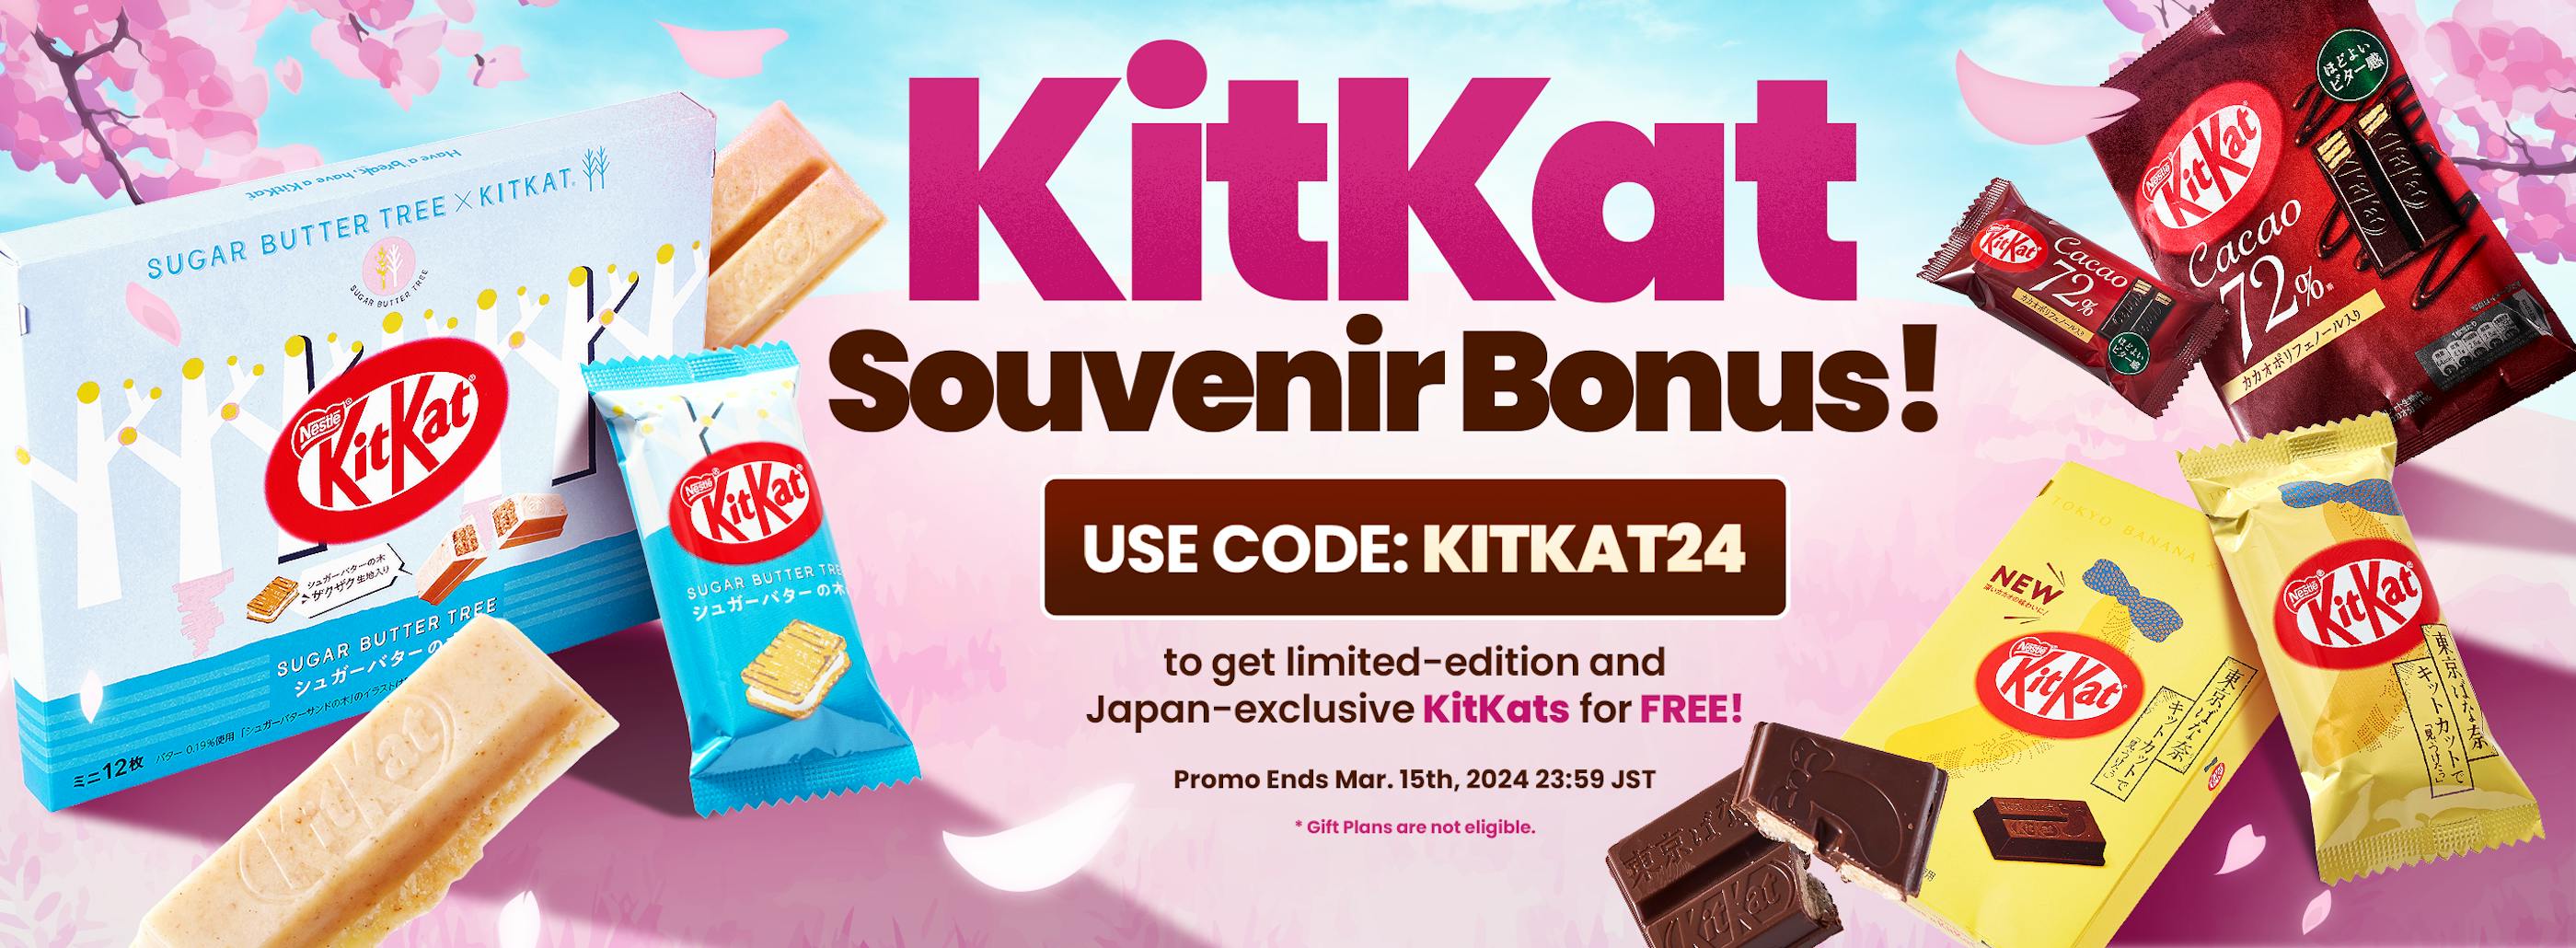 TokyoTreat's KitKat Souvenir Bonus promotion with featured Japan-exclusive KitKats.